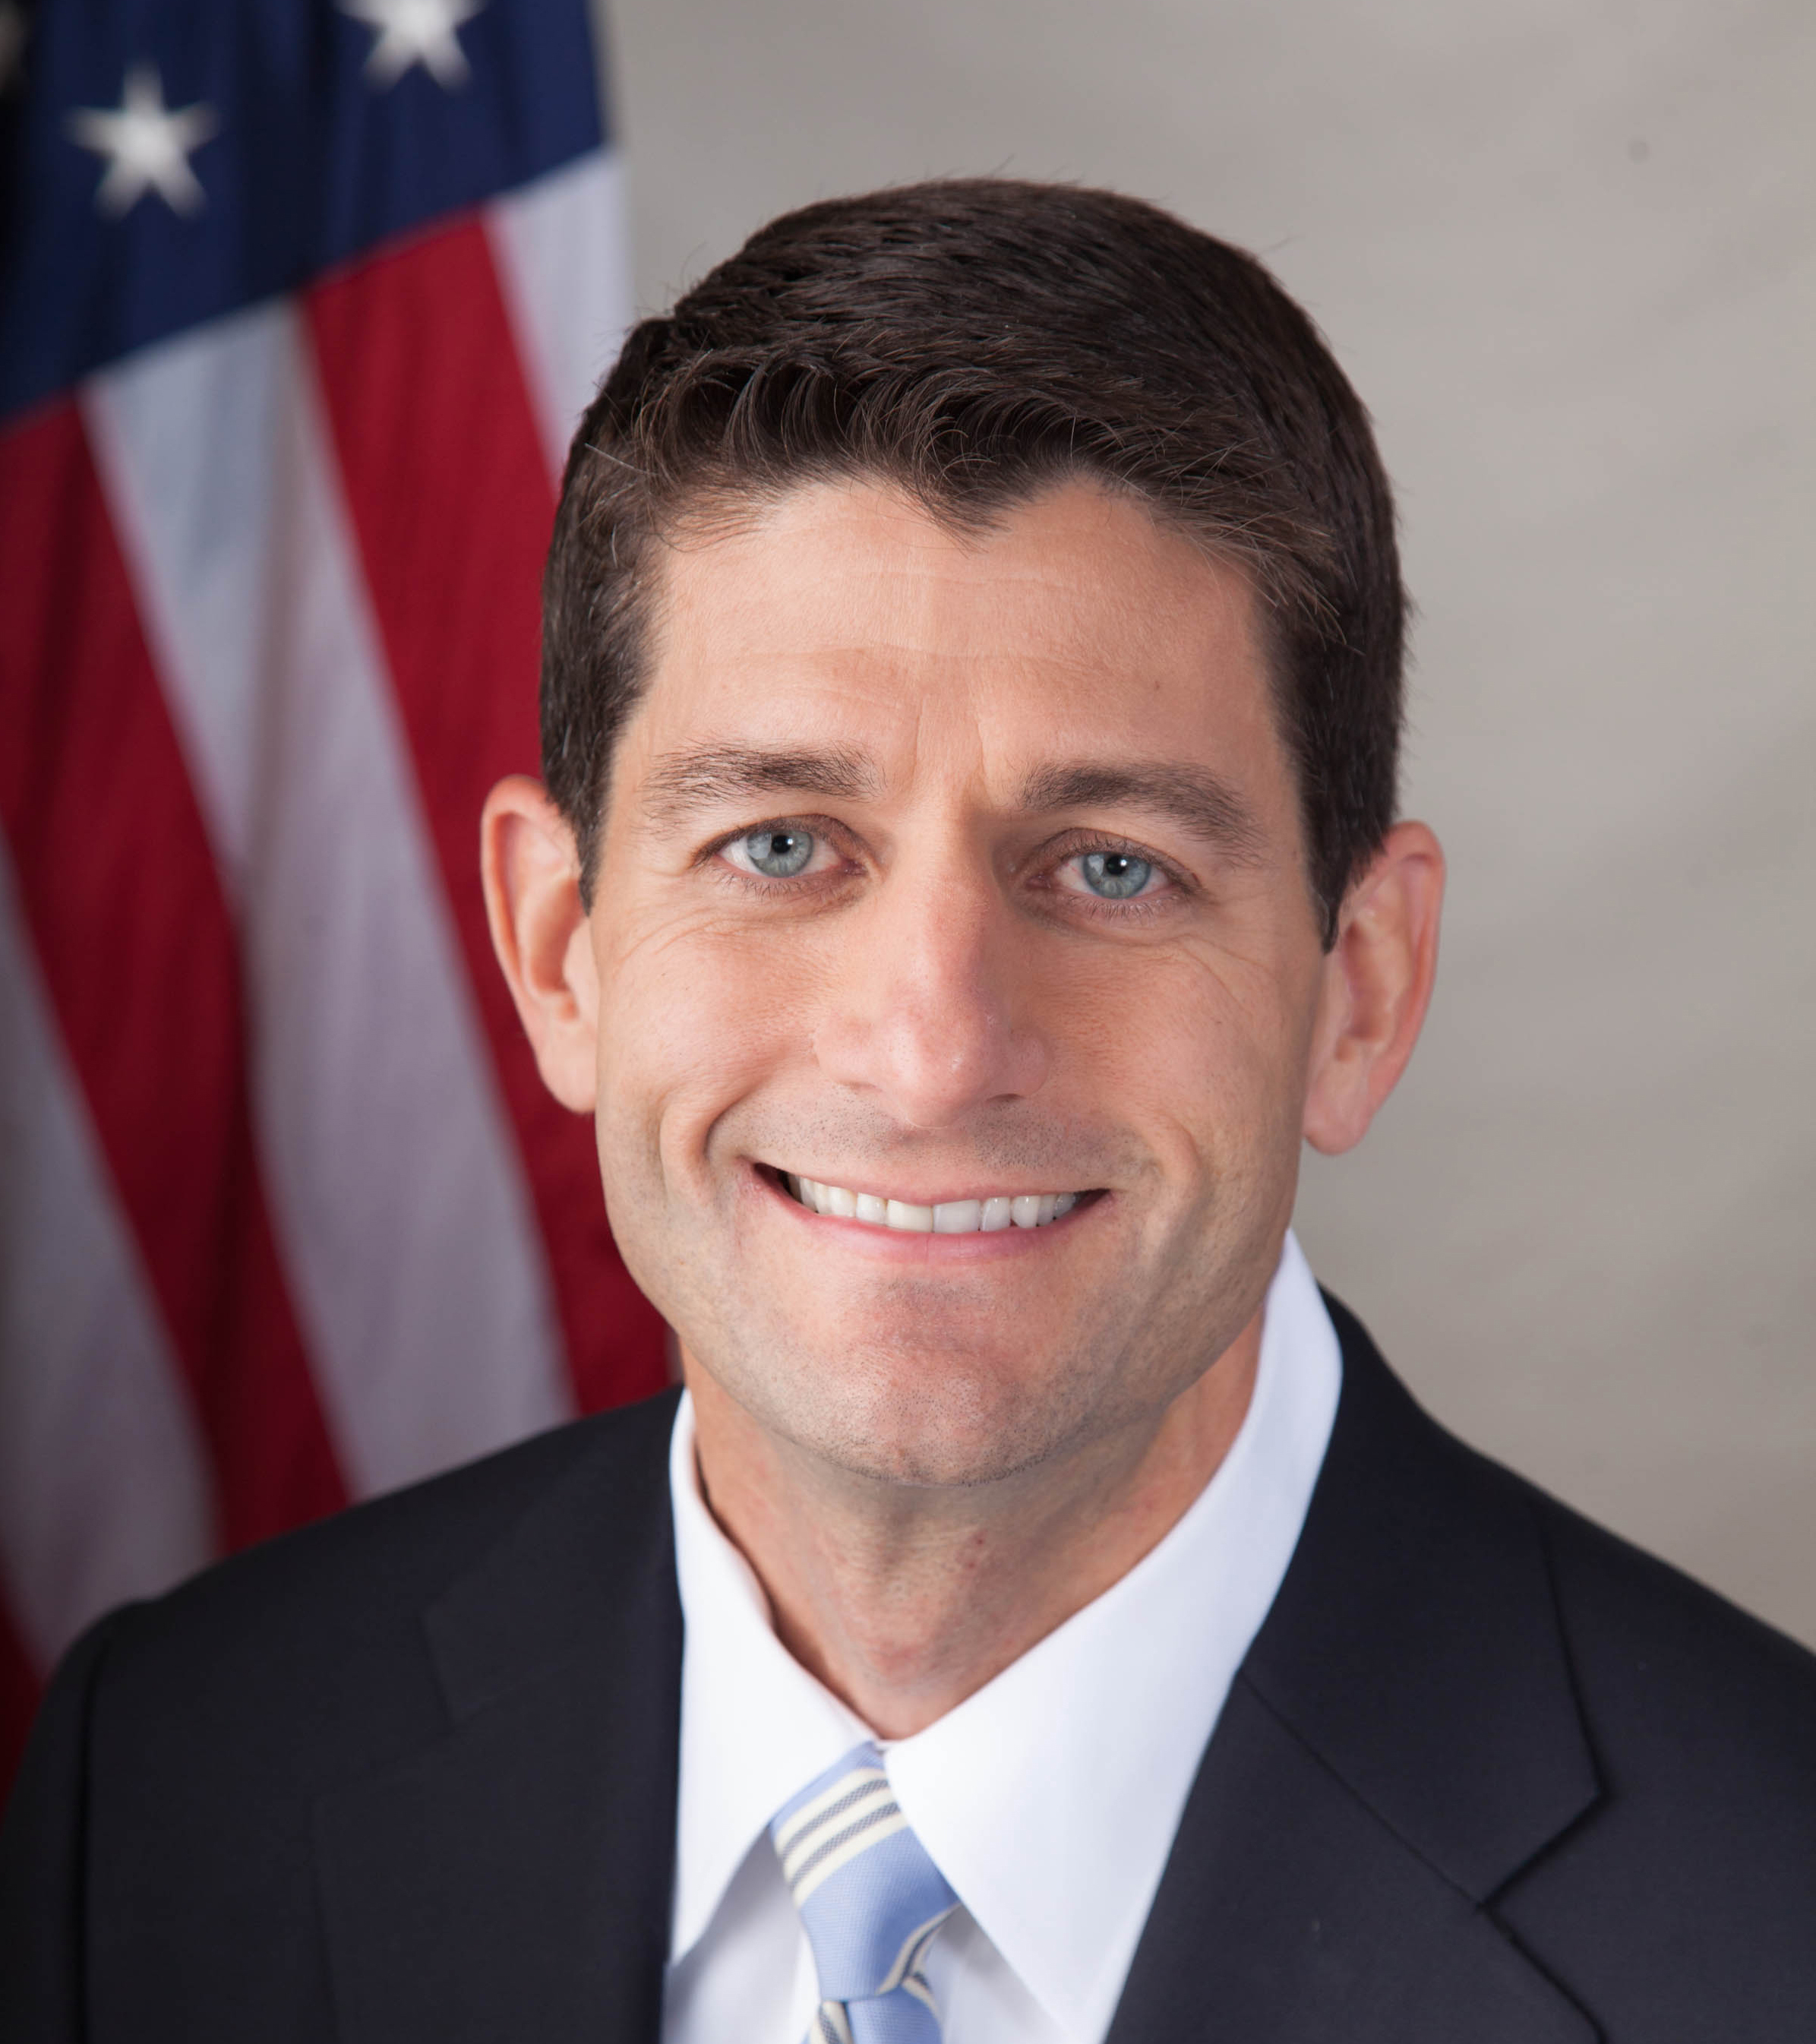 Paul Ryan (R-WI)